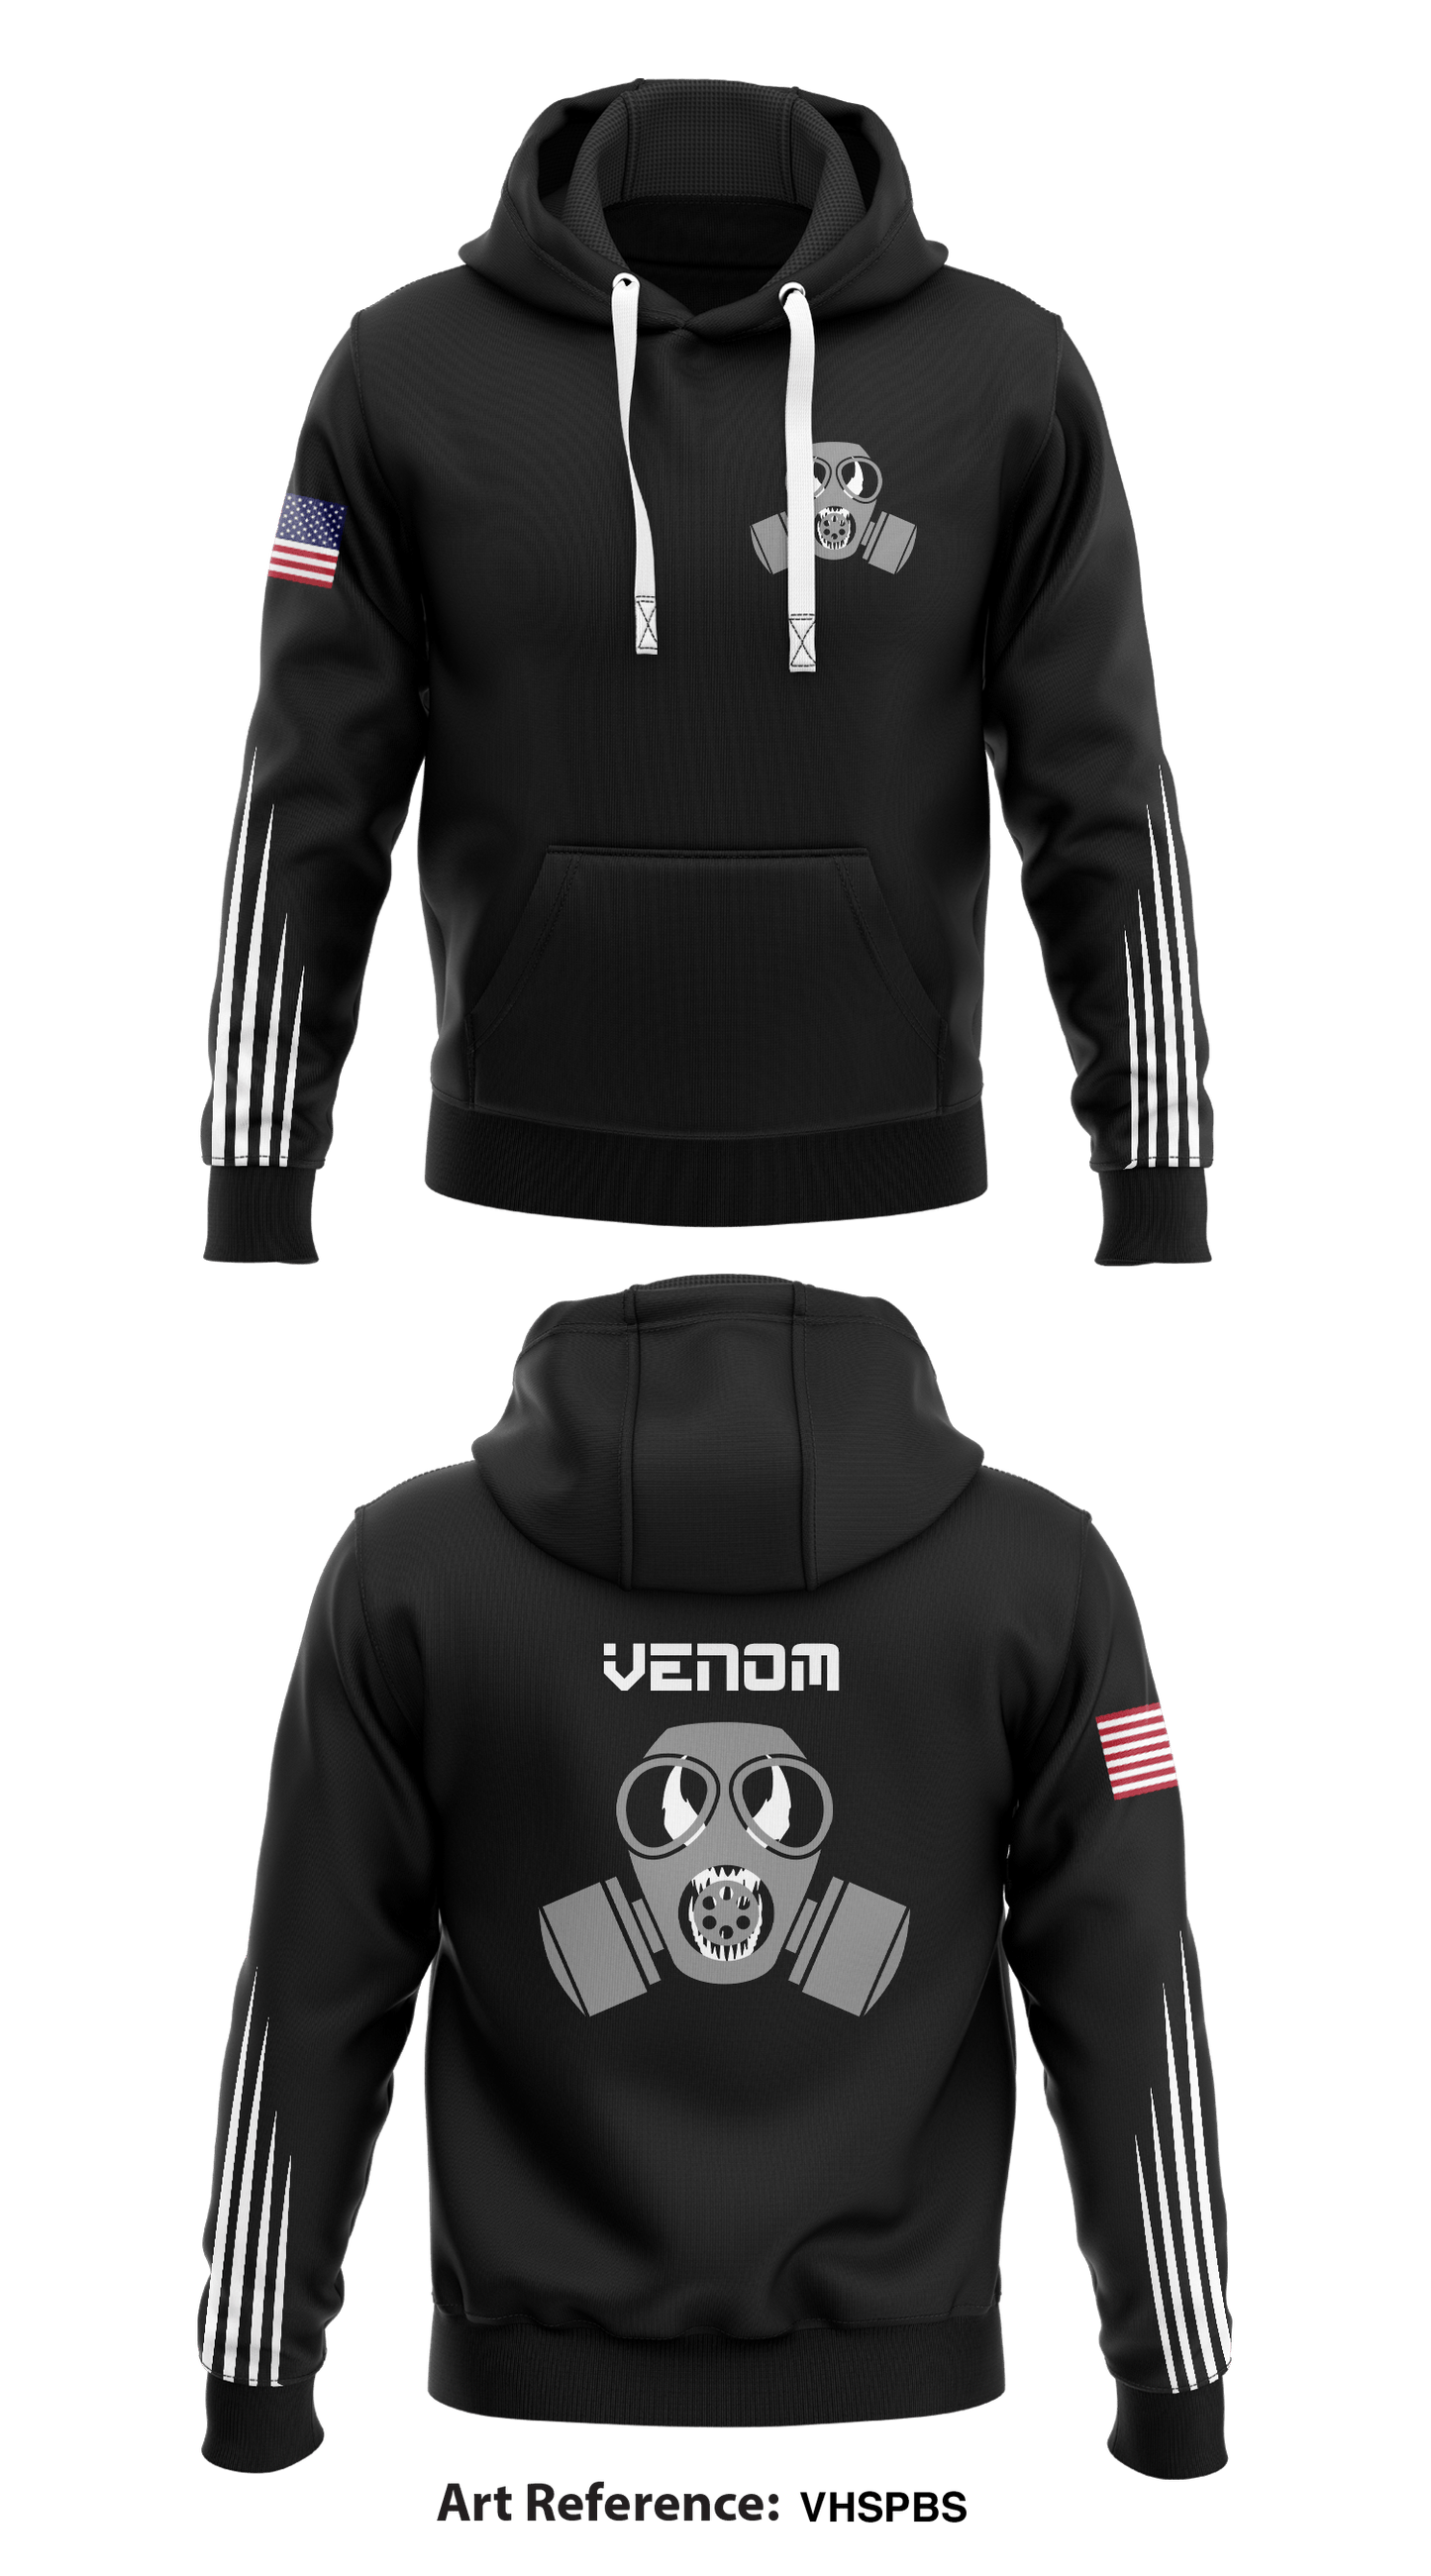 Venom Store 1 Core Men's Hooded Performance Sweatshirt - VhSPbs